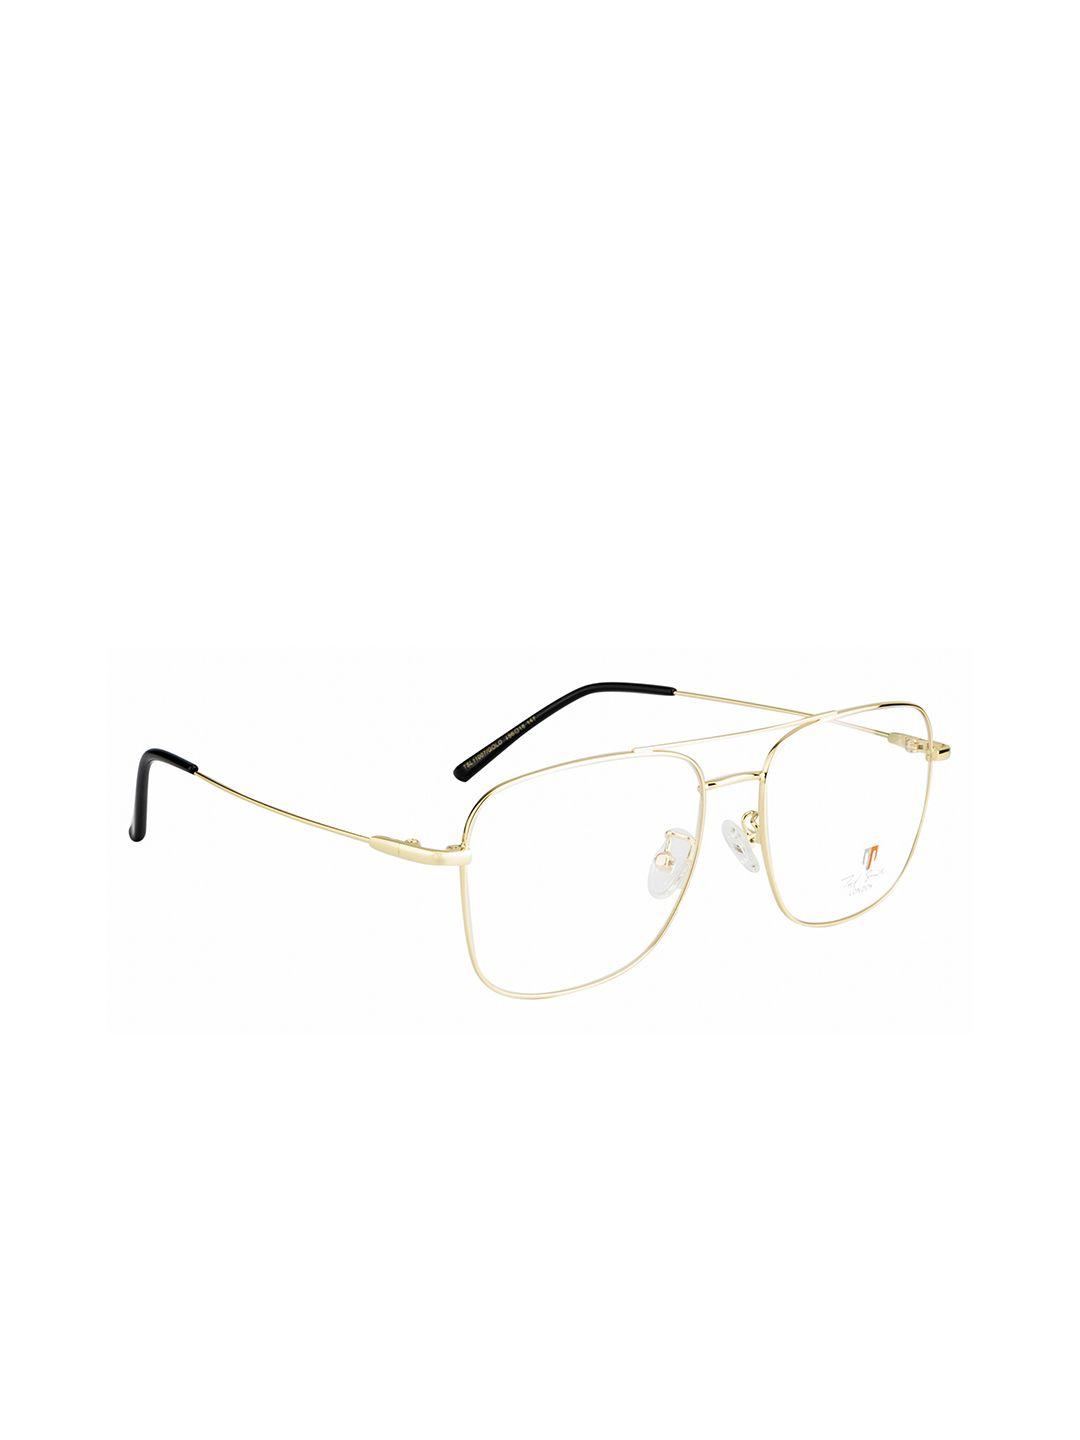 ted smith unisex gold-toned & black full rim square frame ts-11007_gldframes eyeglasses